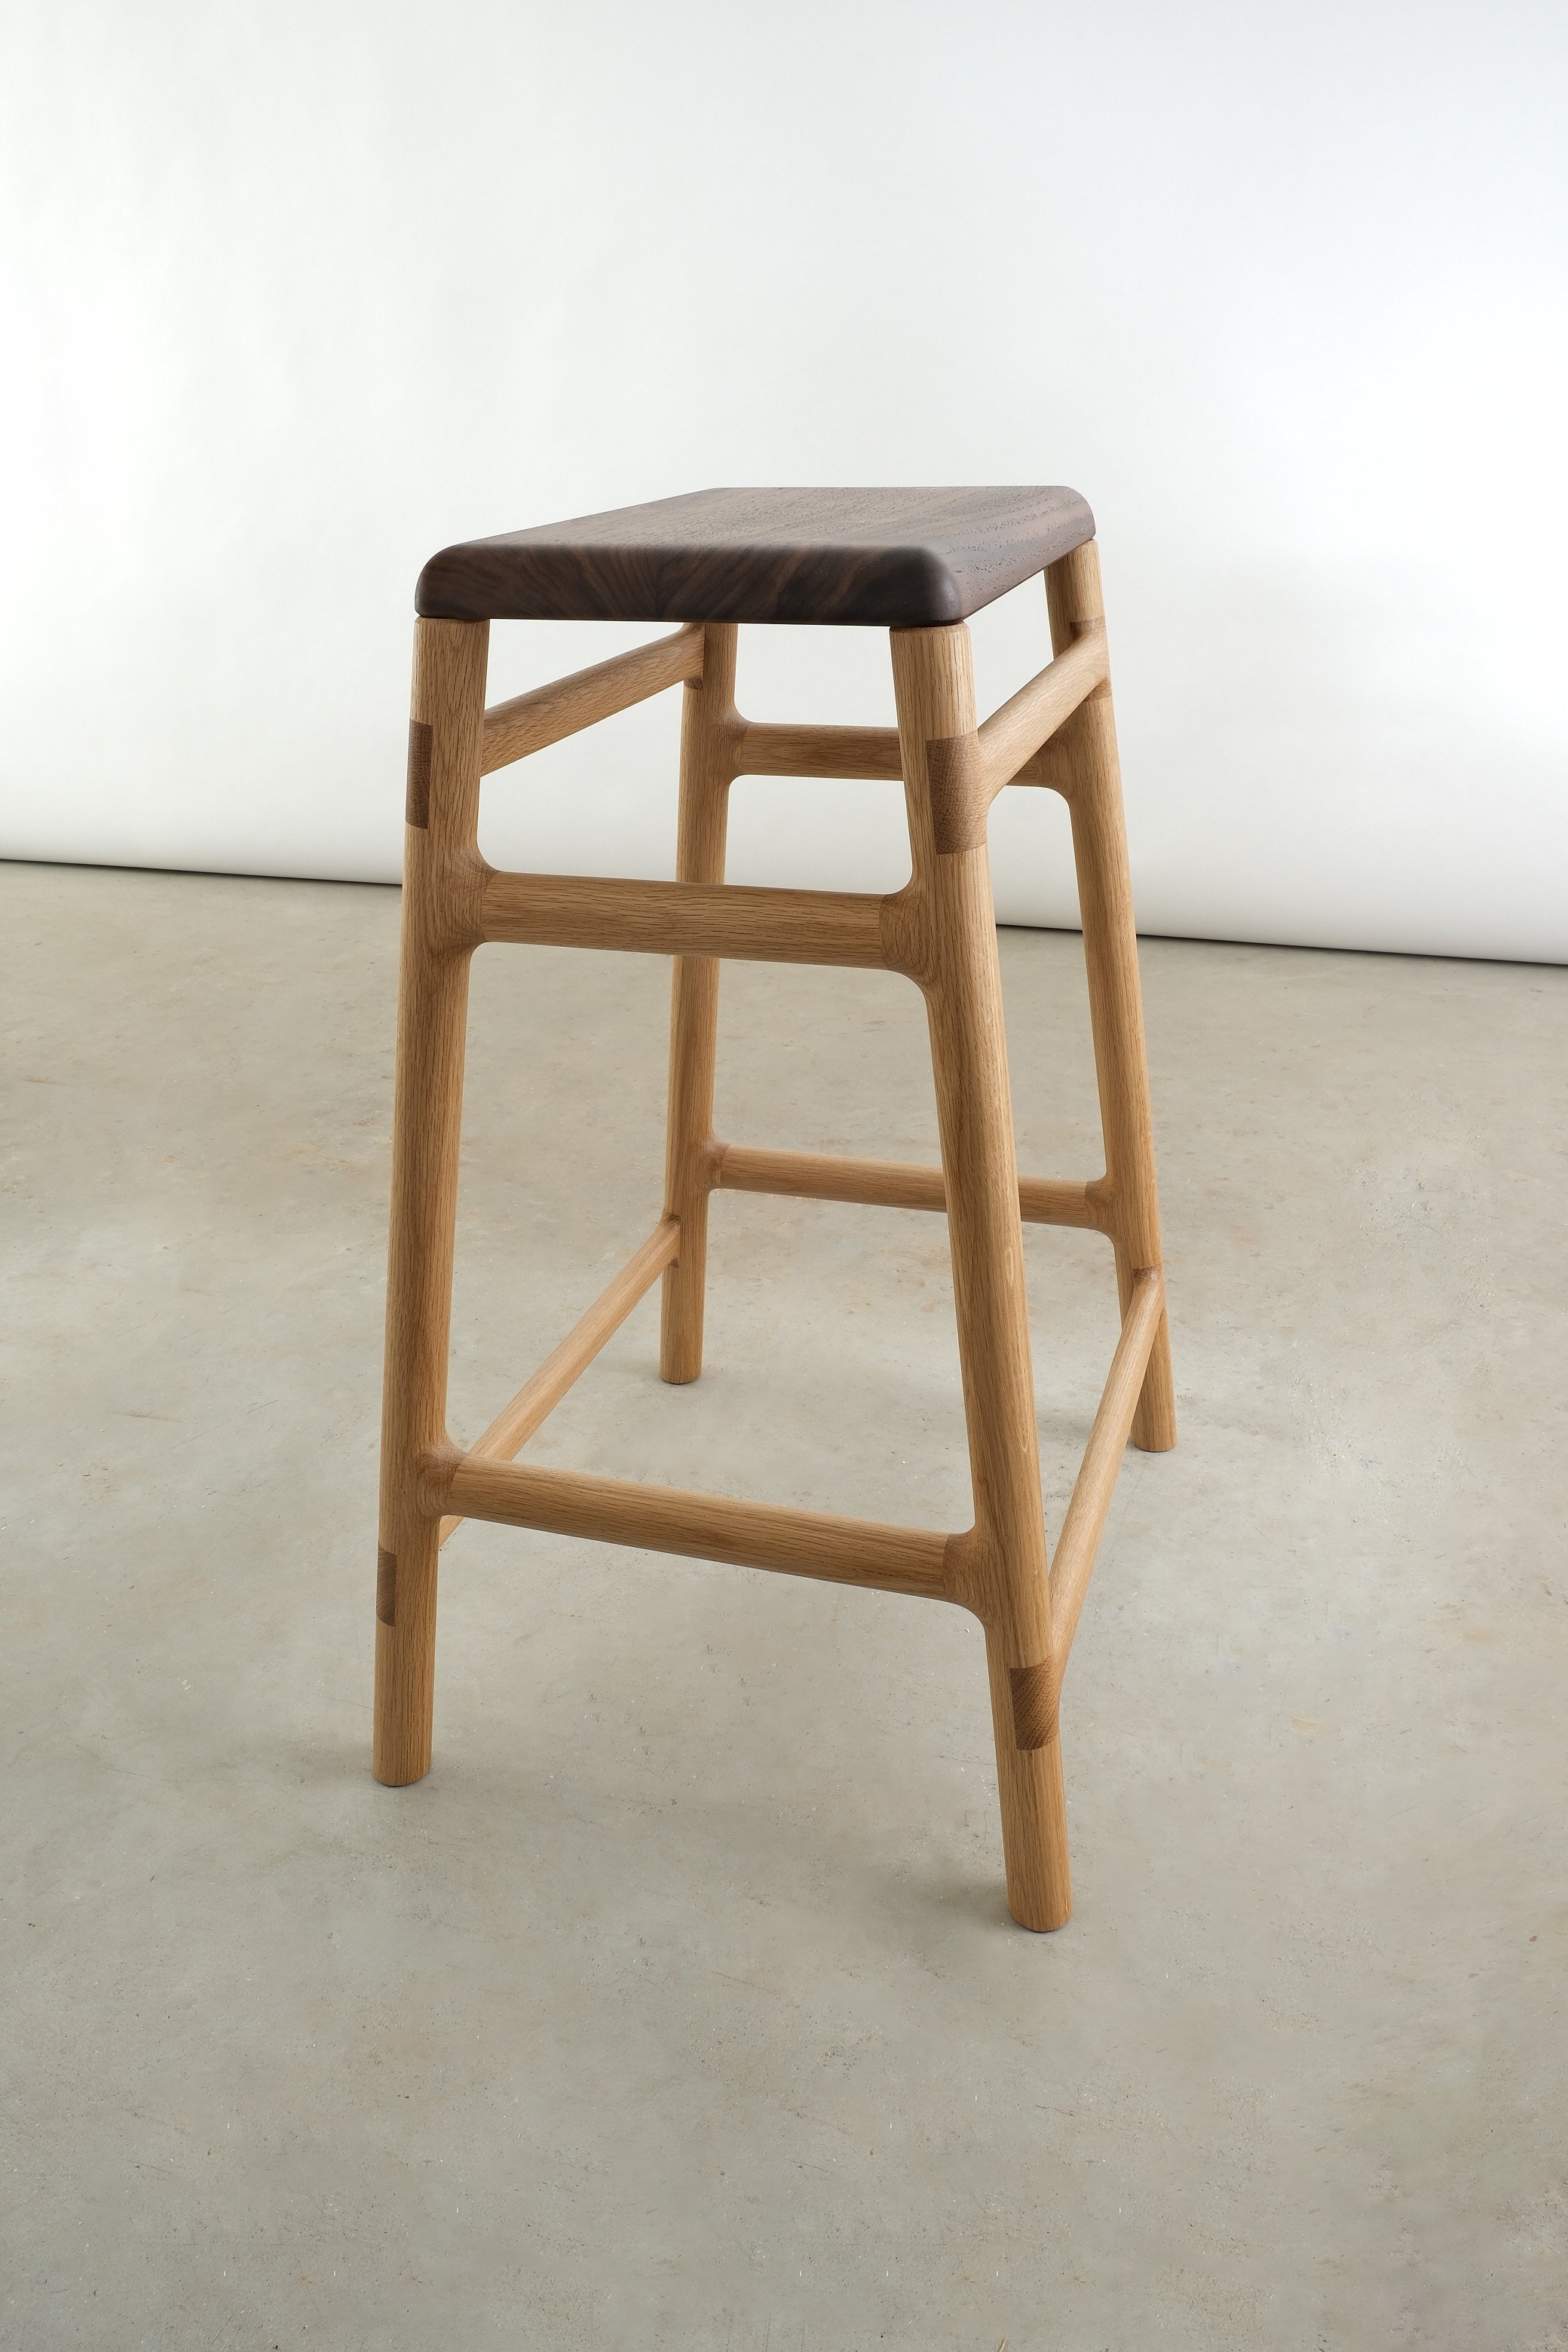 albirght stool white backround 3:4 closeup.JPG